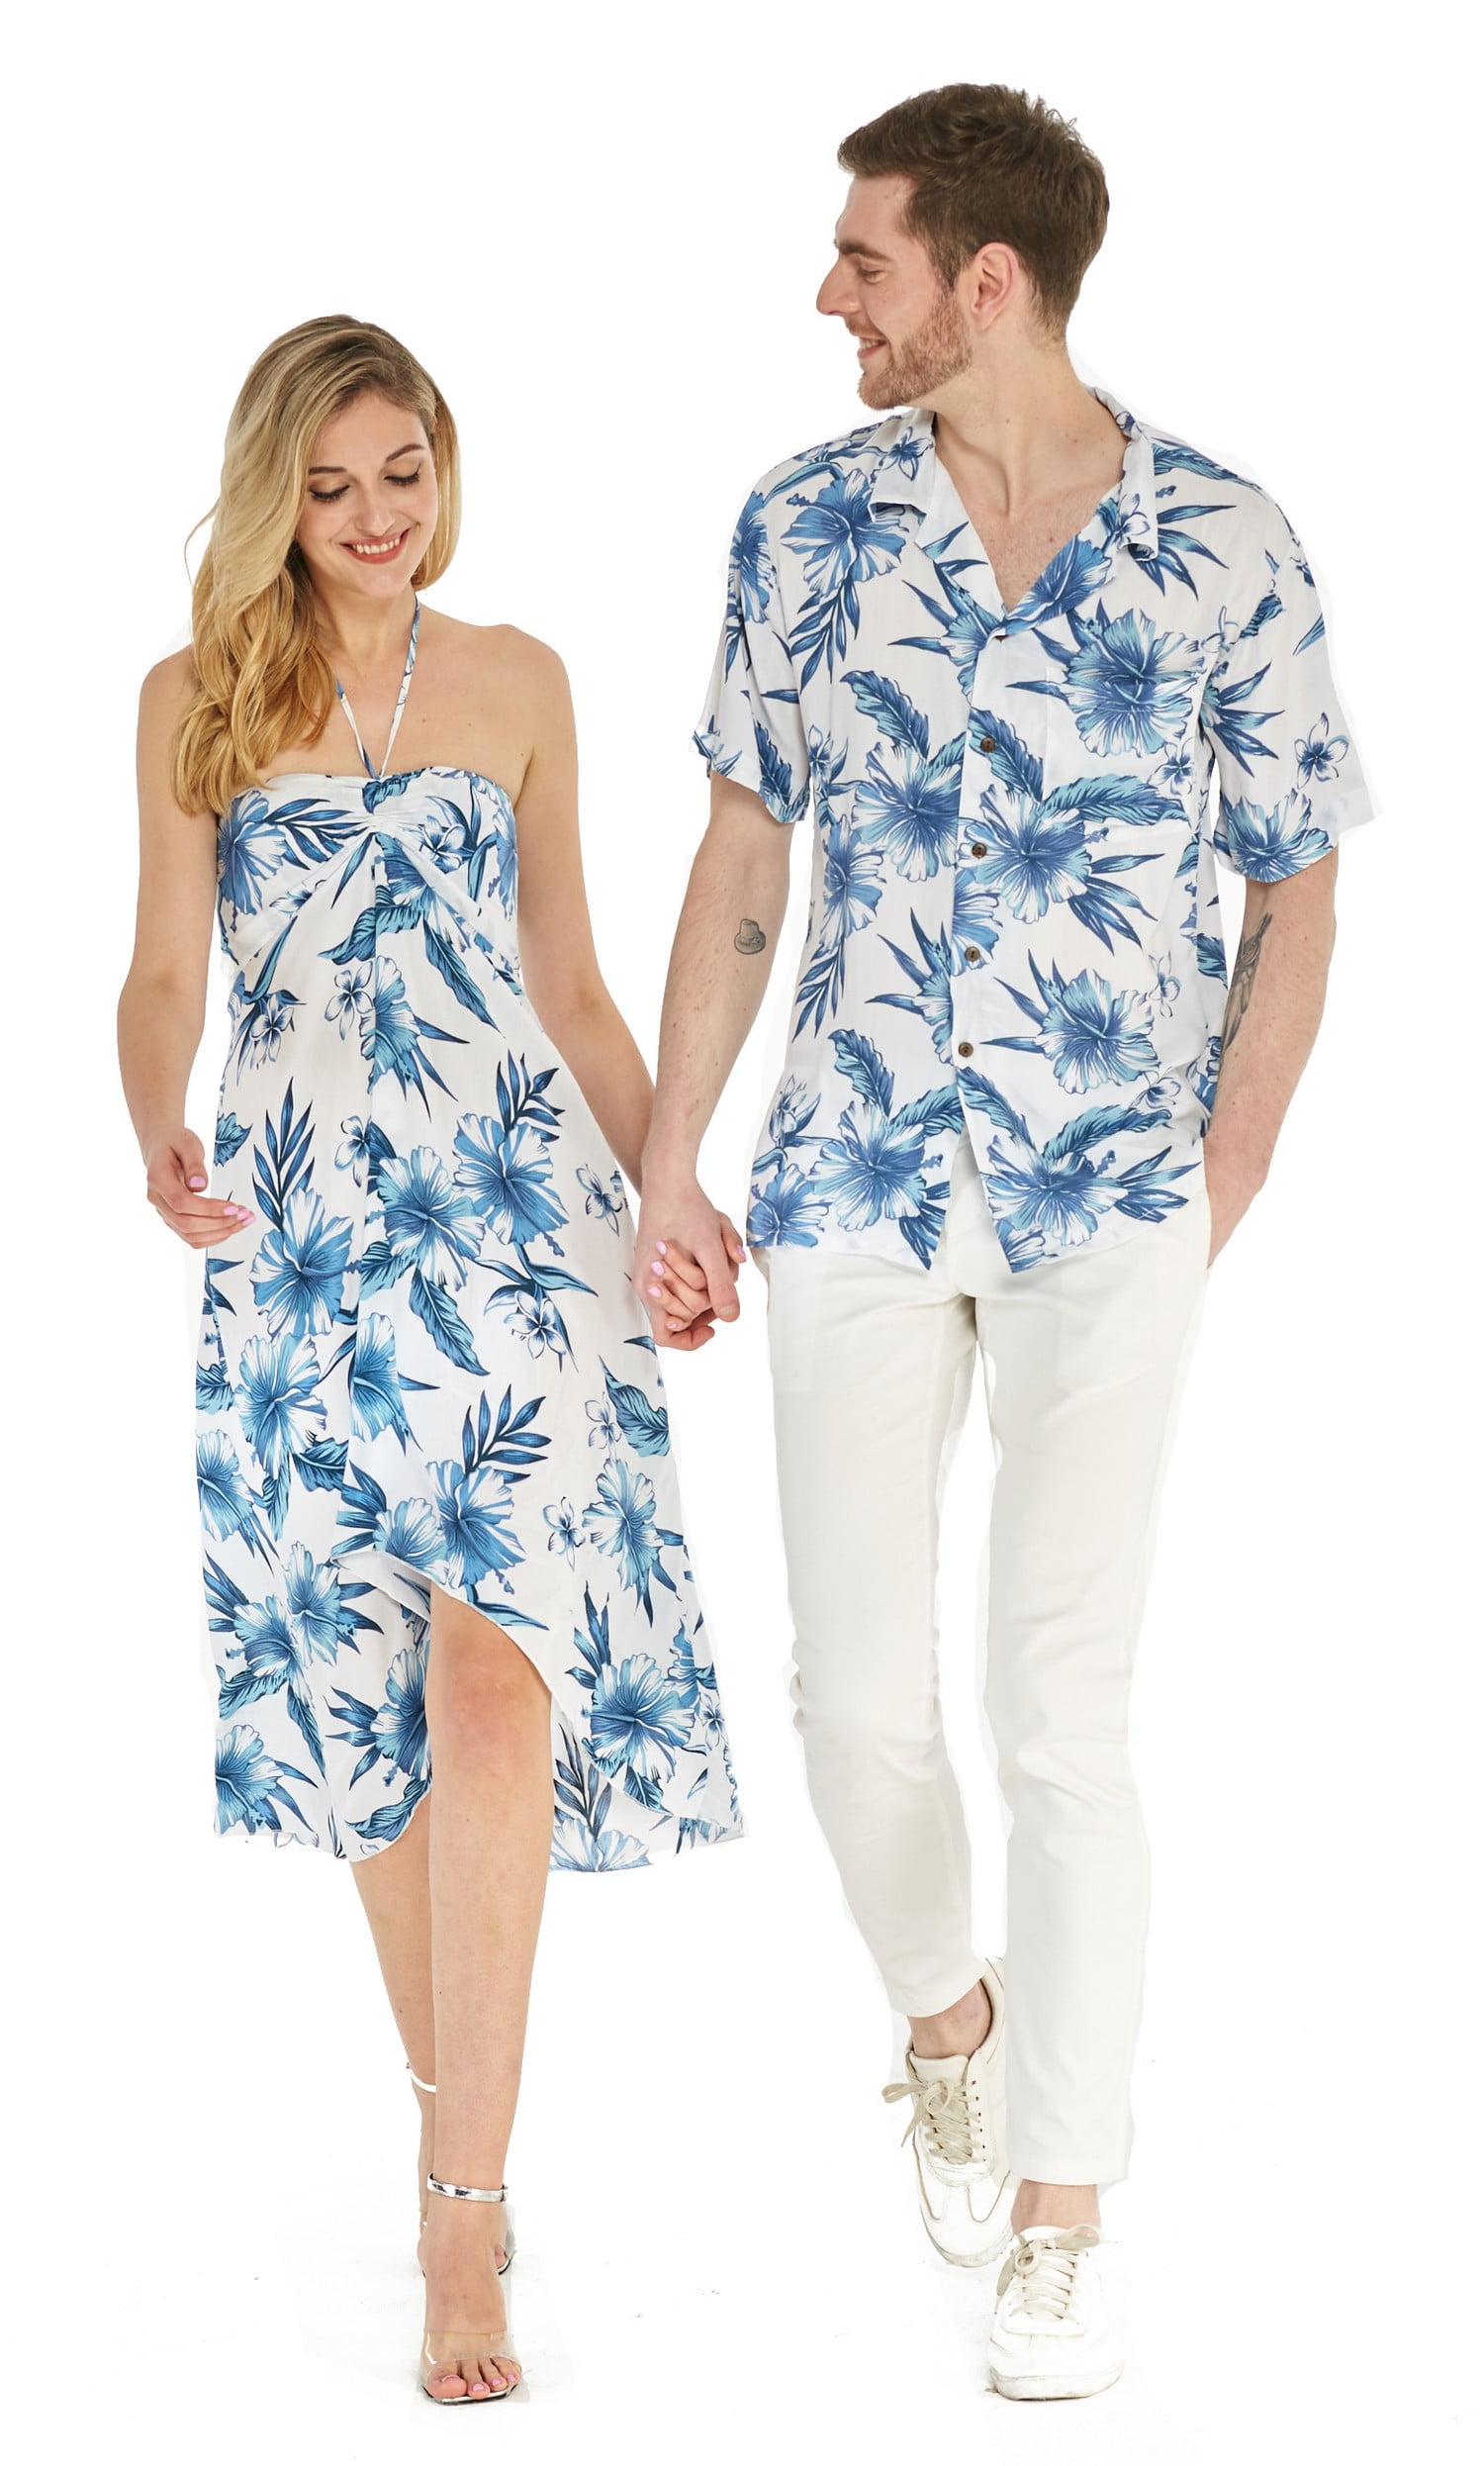 matching hawaiian dresses